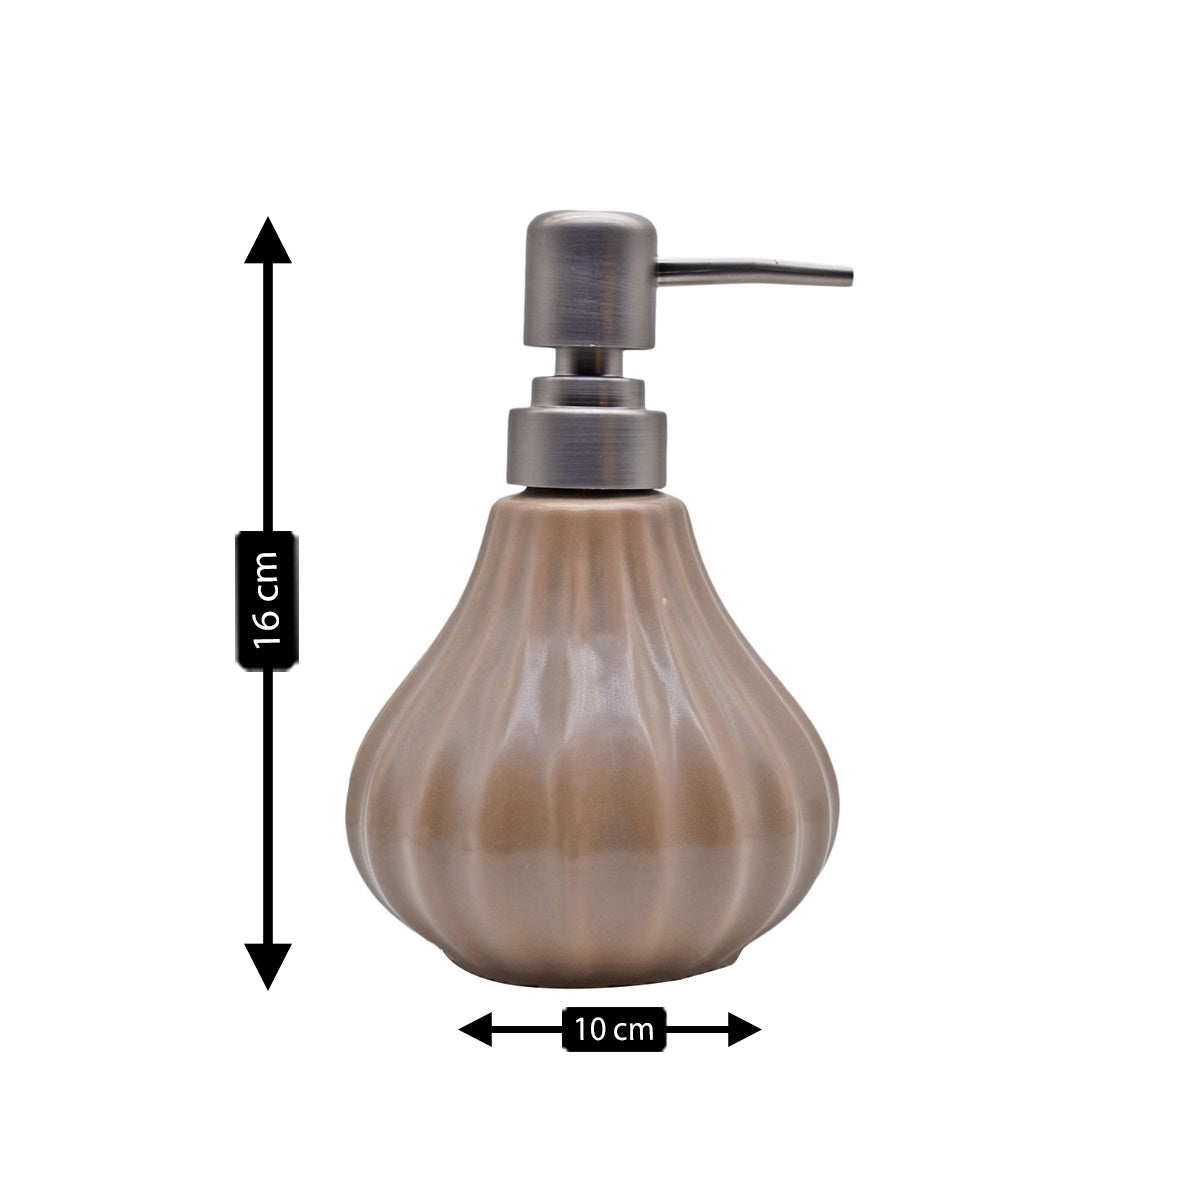 Ceramic Soap Dispenser Pump for Bathroom for Bath Gel, Lotion, Shampoo (8647)